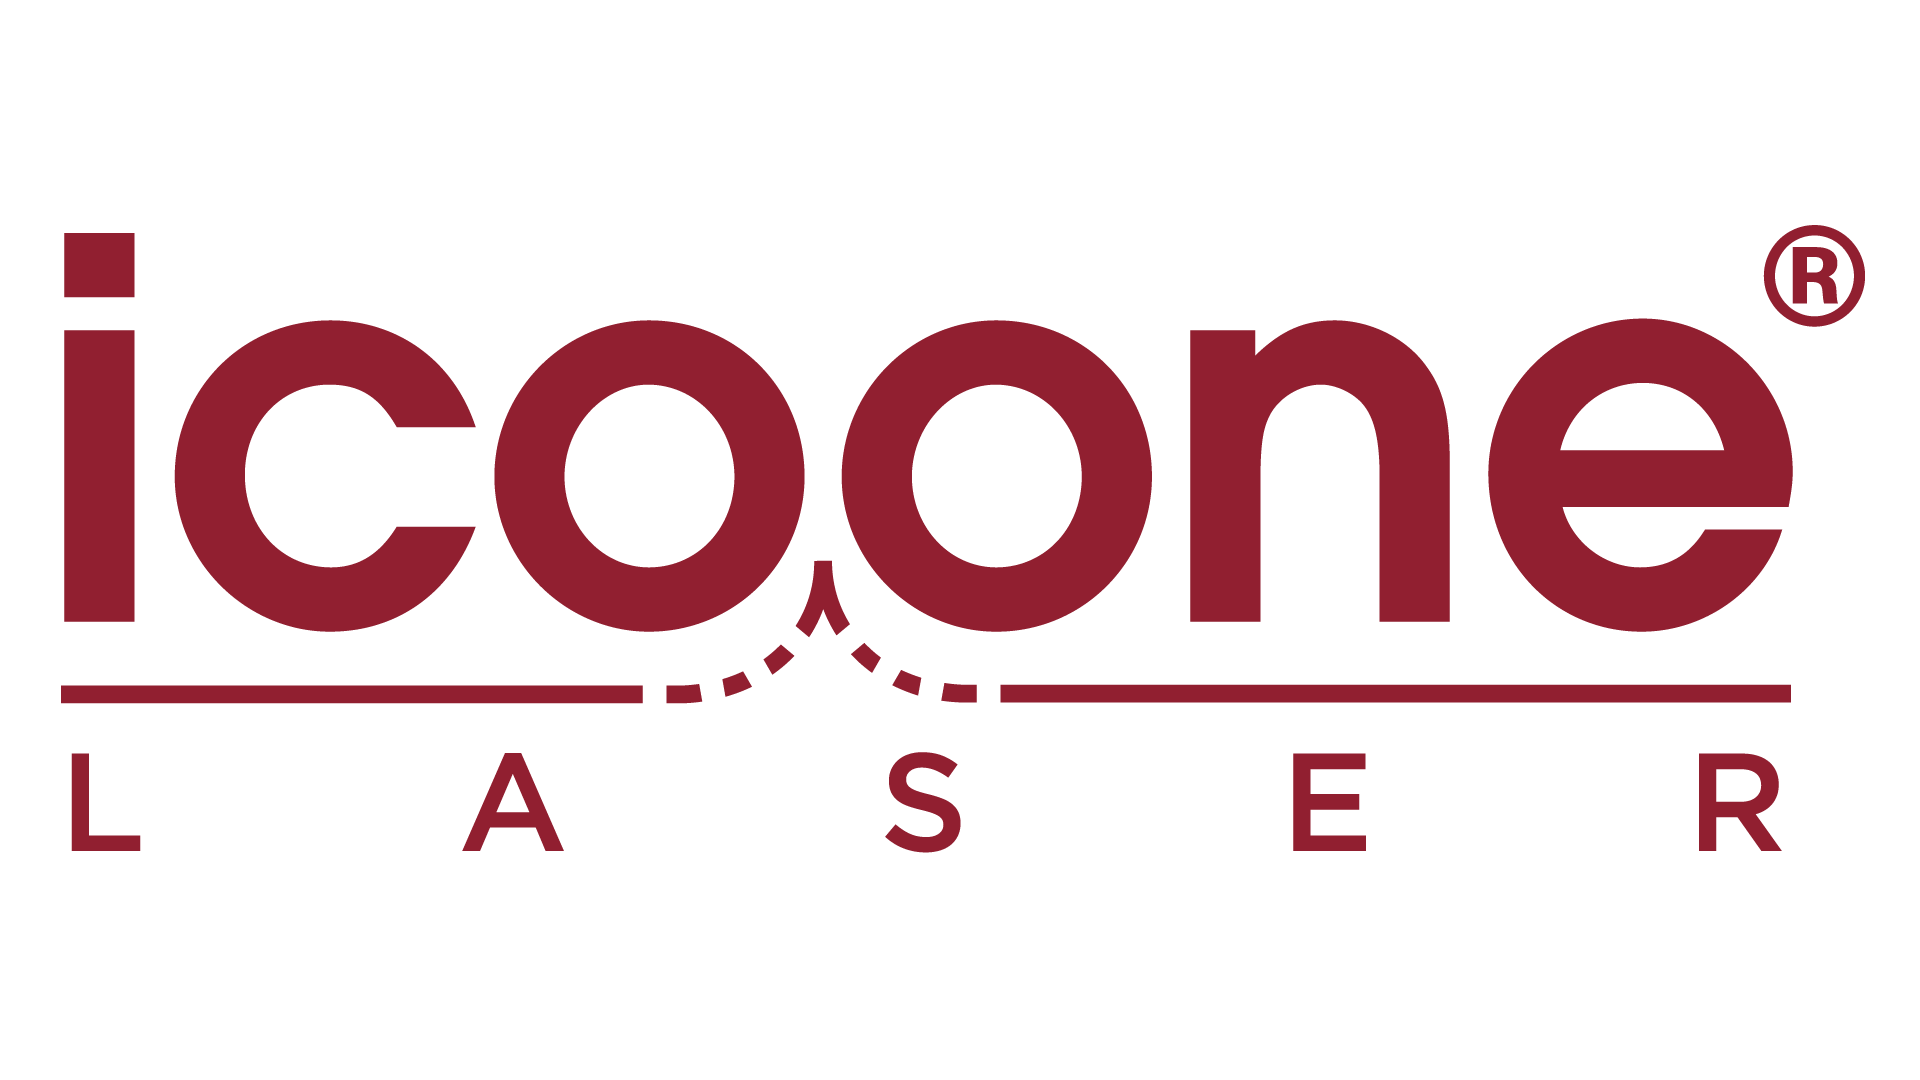 Logo Icoone